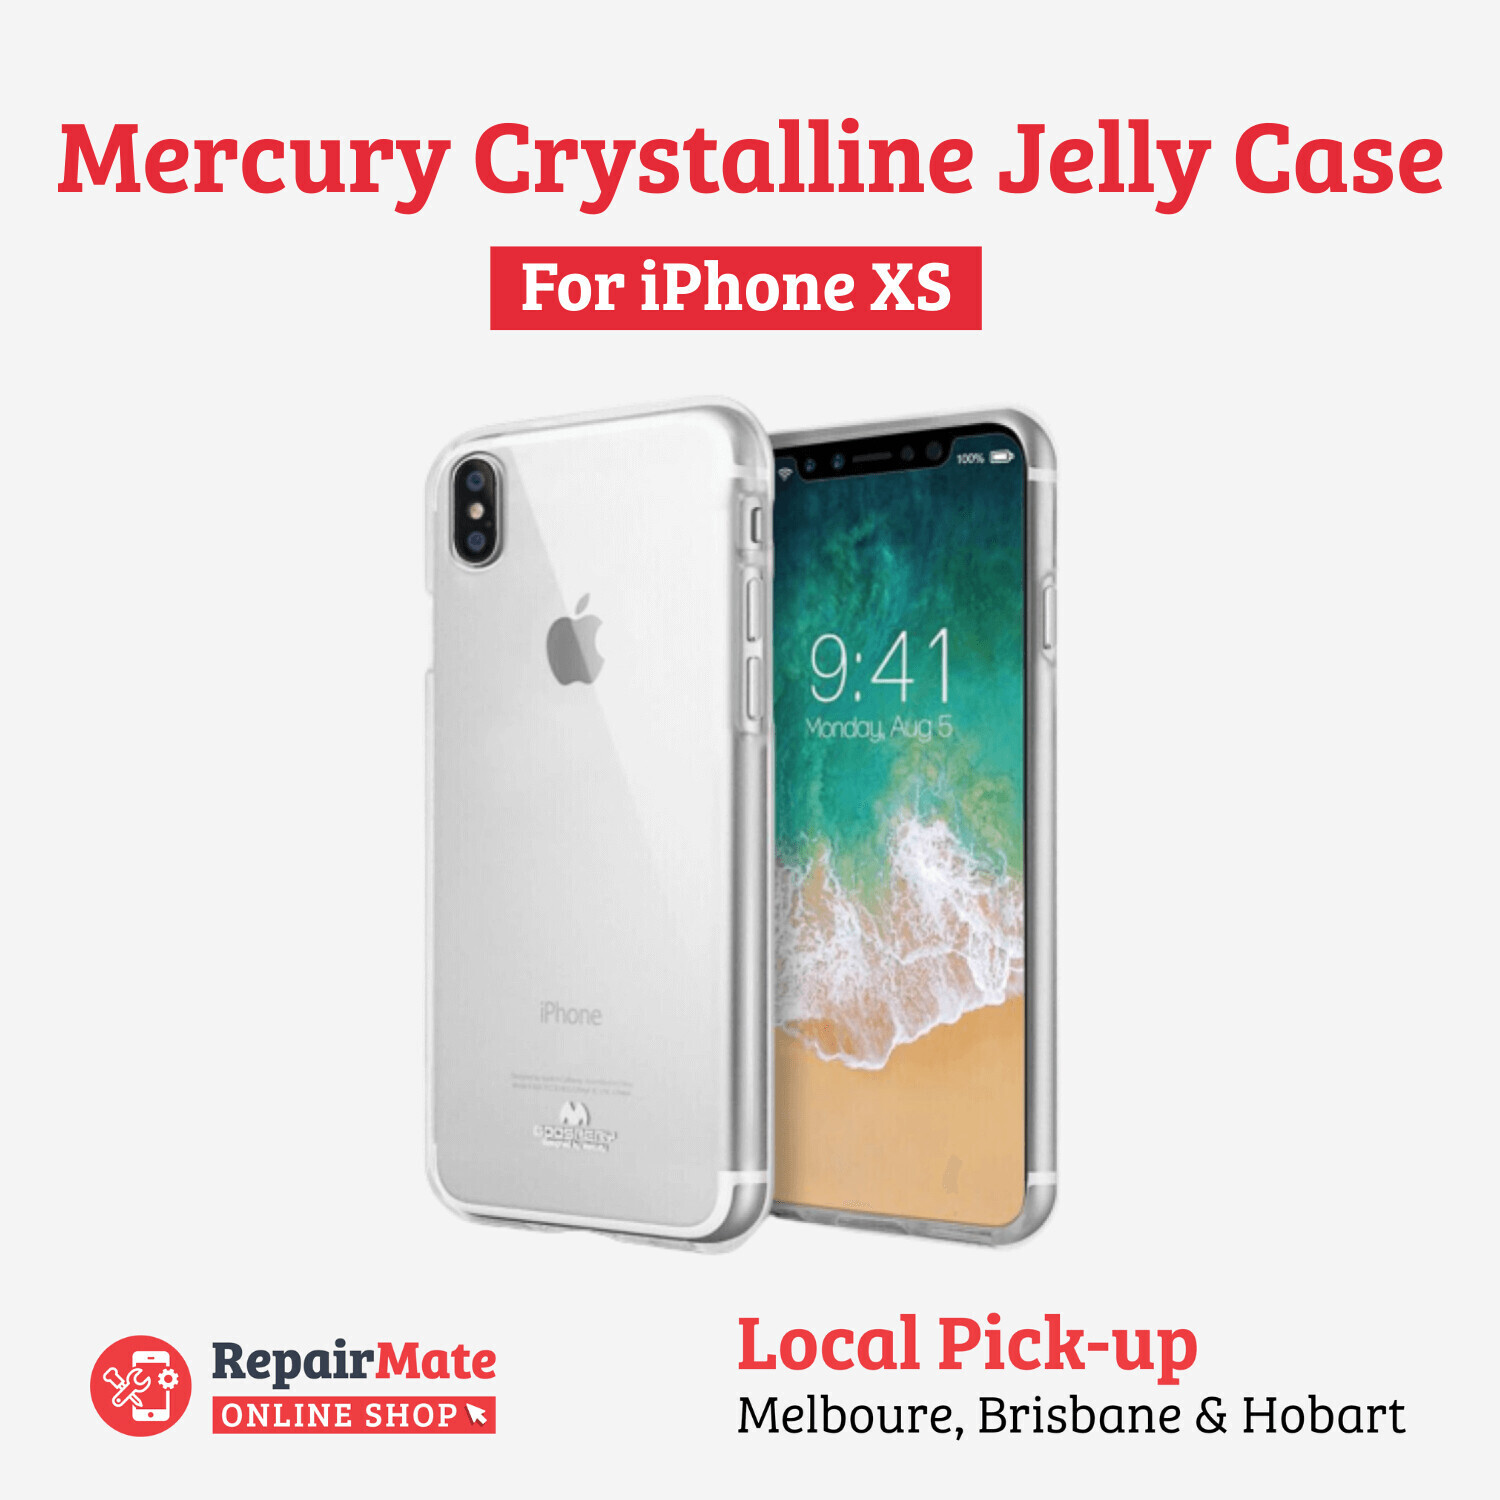 iPhone XS Mercury Crystalline Jelly Case Cover